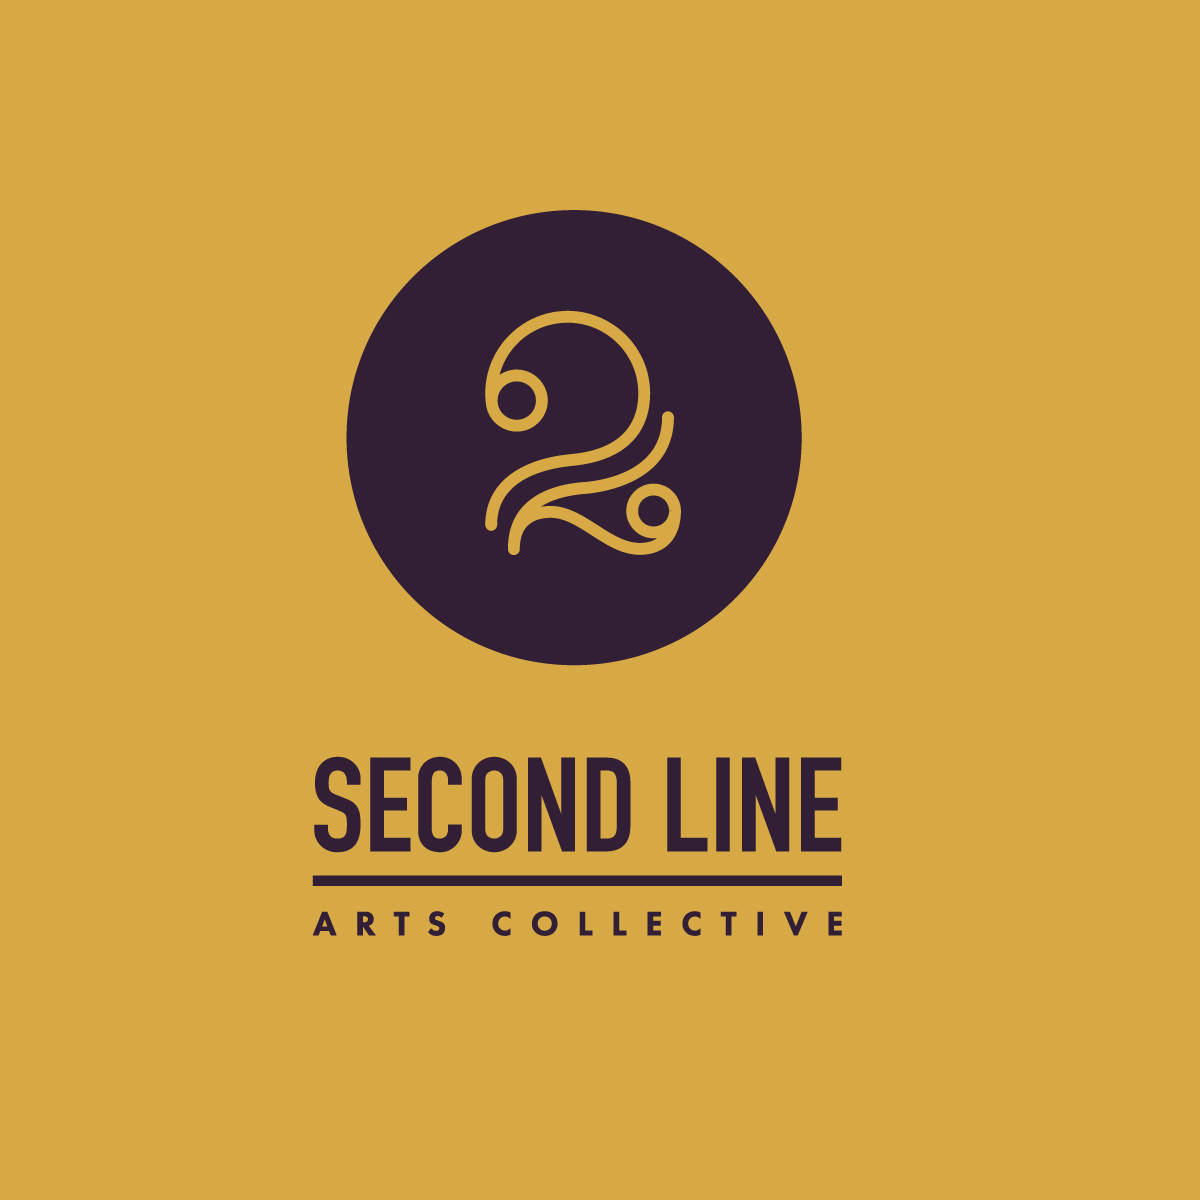 Second Line Arts Collective logo